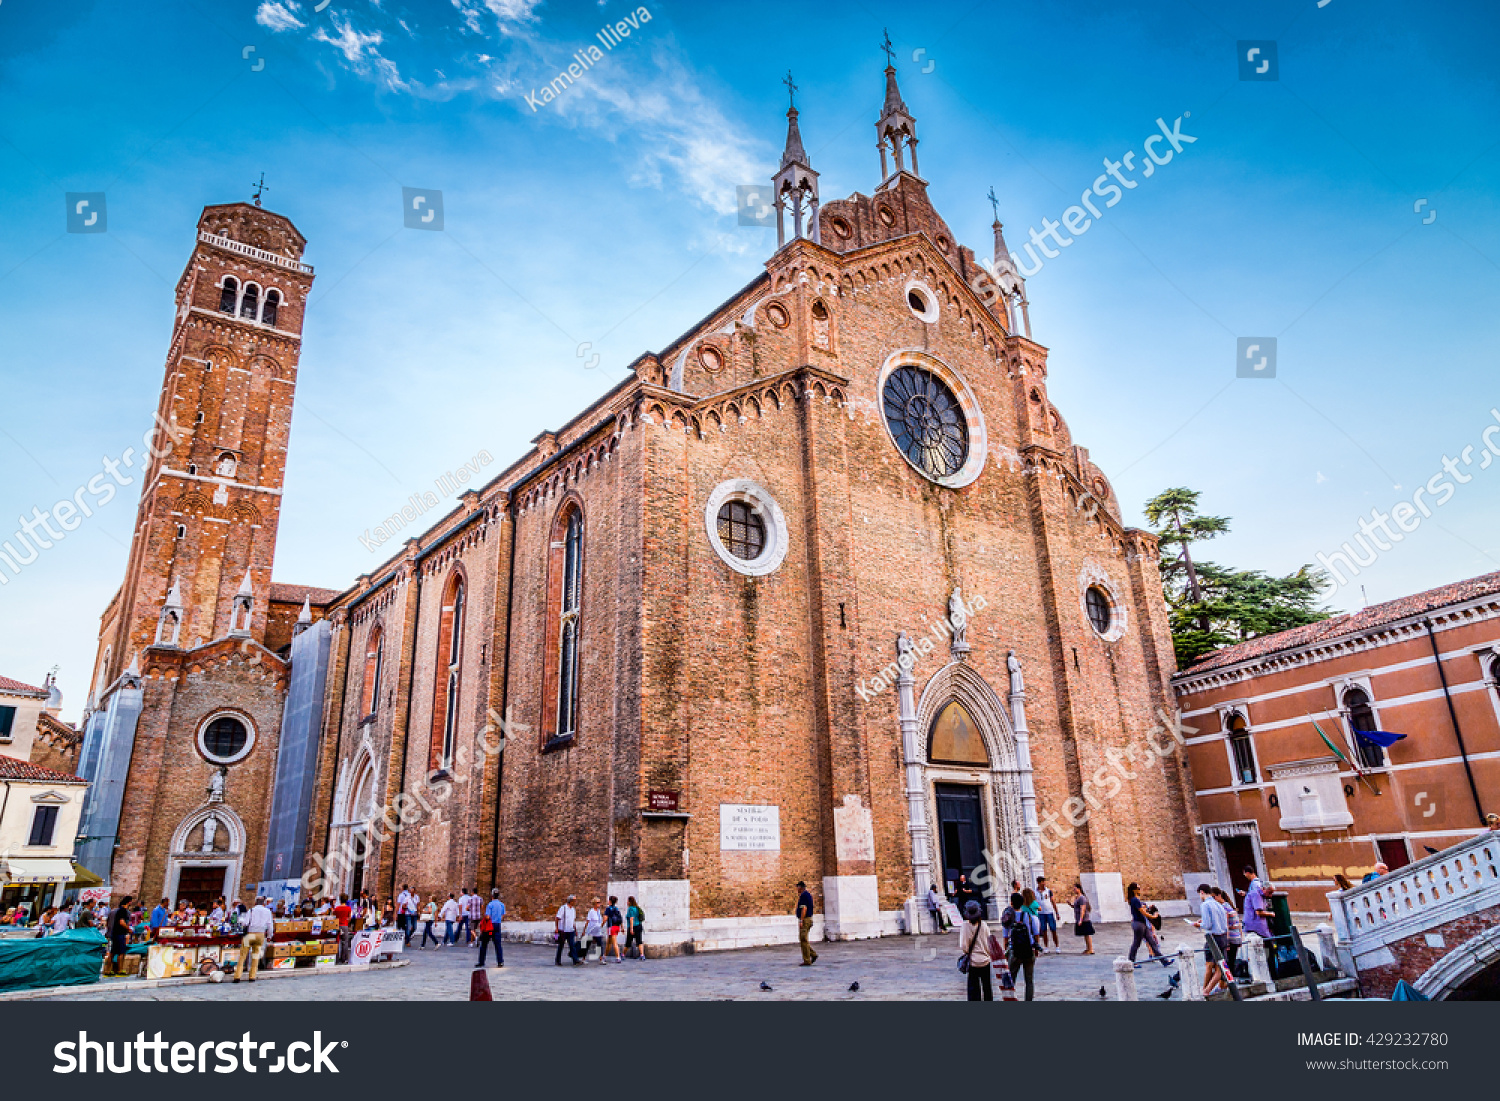 View of Santa Maria Gloriosa dei Frari Church in Venice, Italy (Basilica di Santa Maria Gloriosa dei Frari) on a sunny summer day #429232780